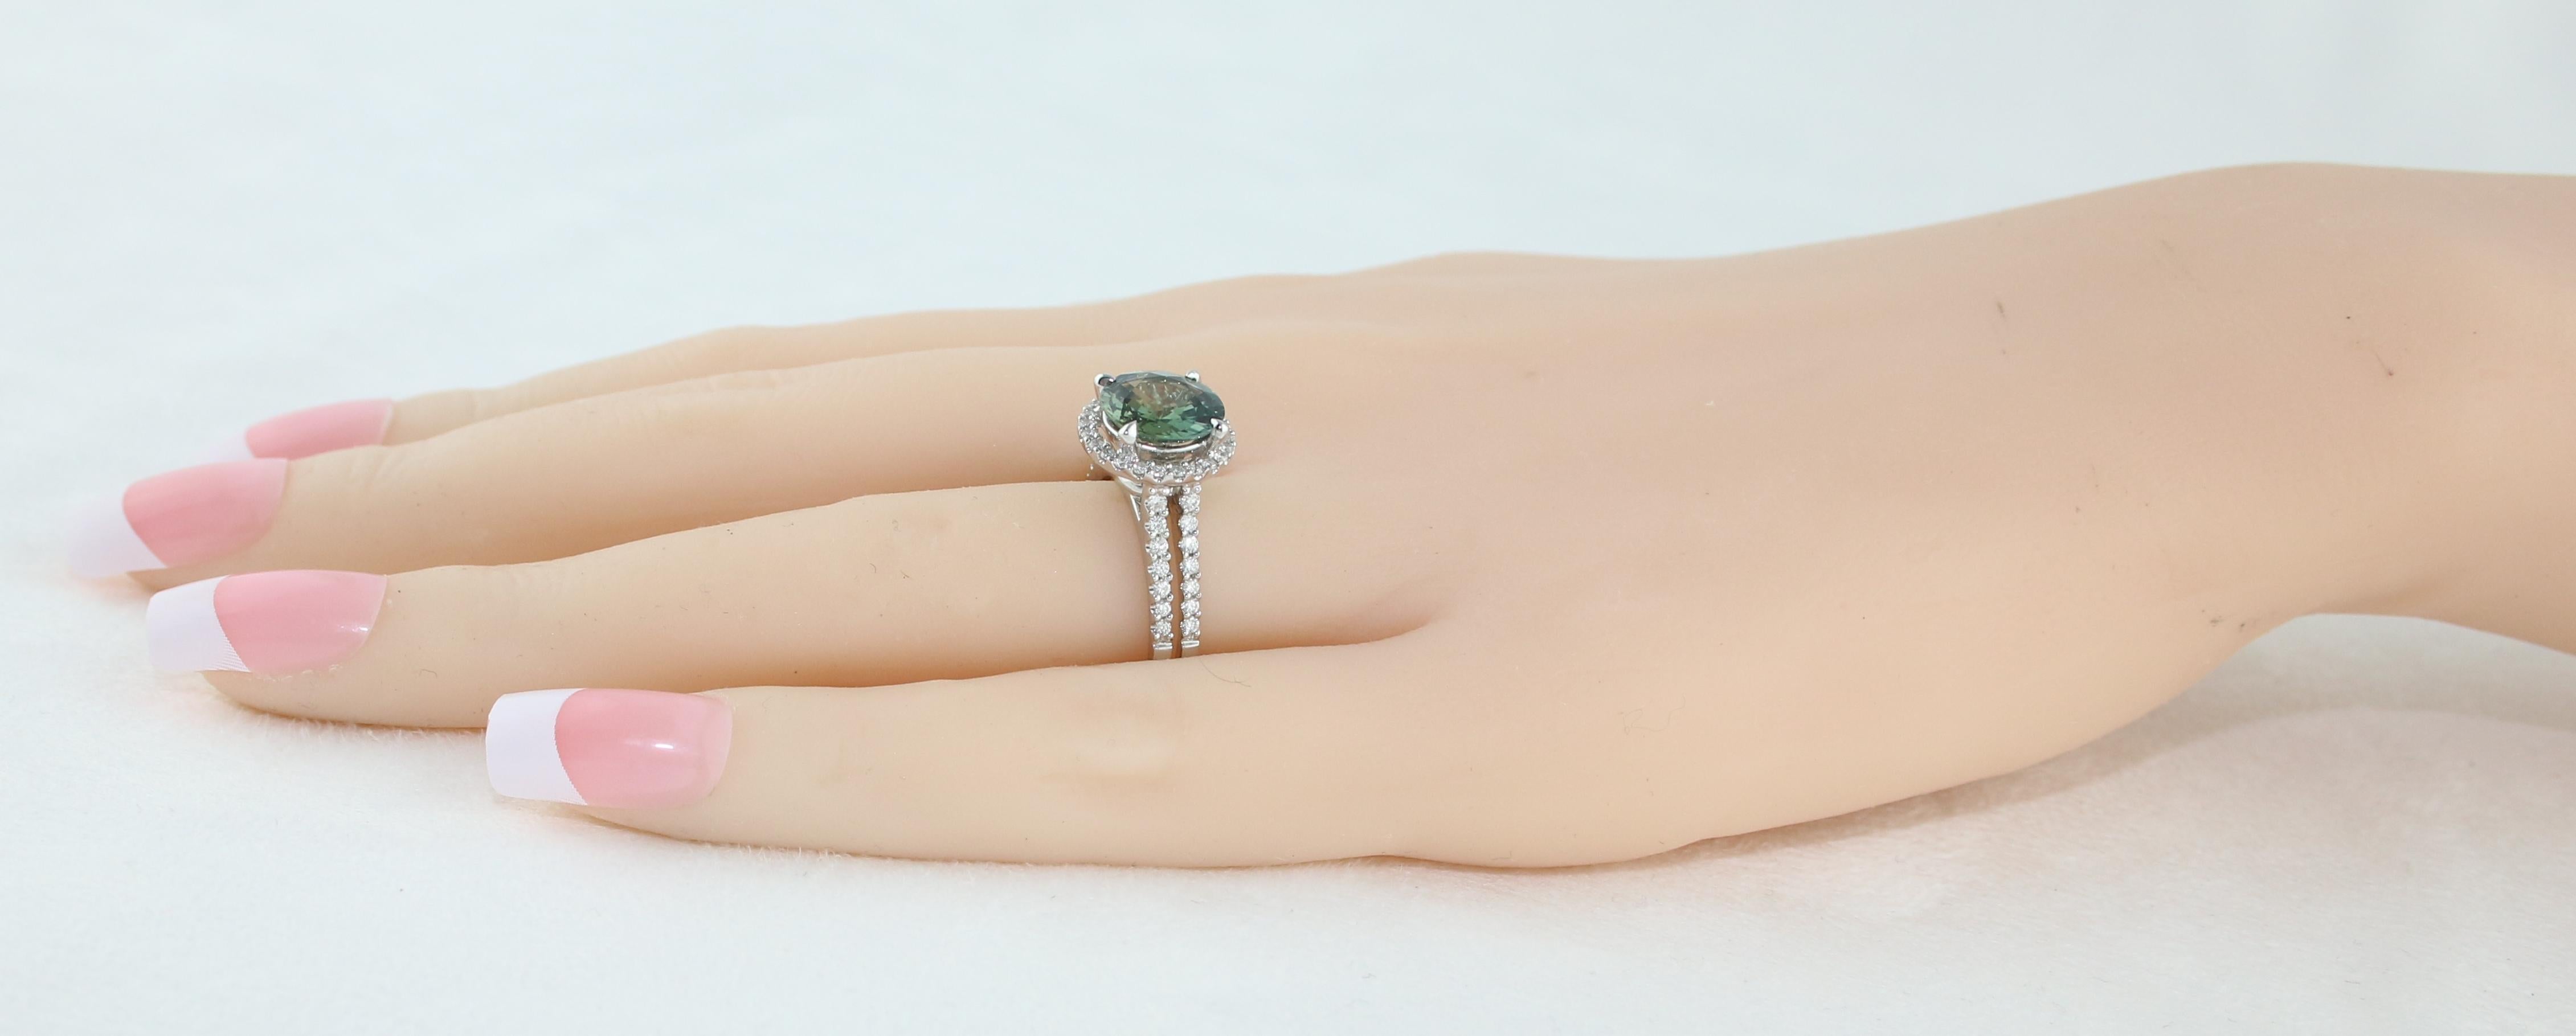 Round Cut Certified No Heat 2.56 Carat Bluish Green Sapphire Diamond Gold Ring For Sale